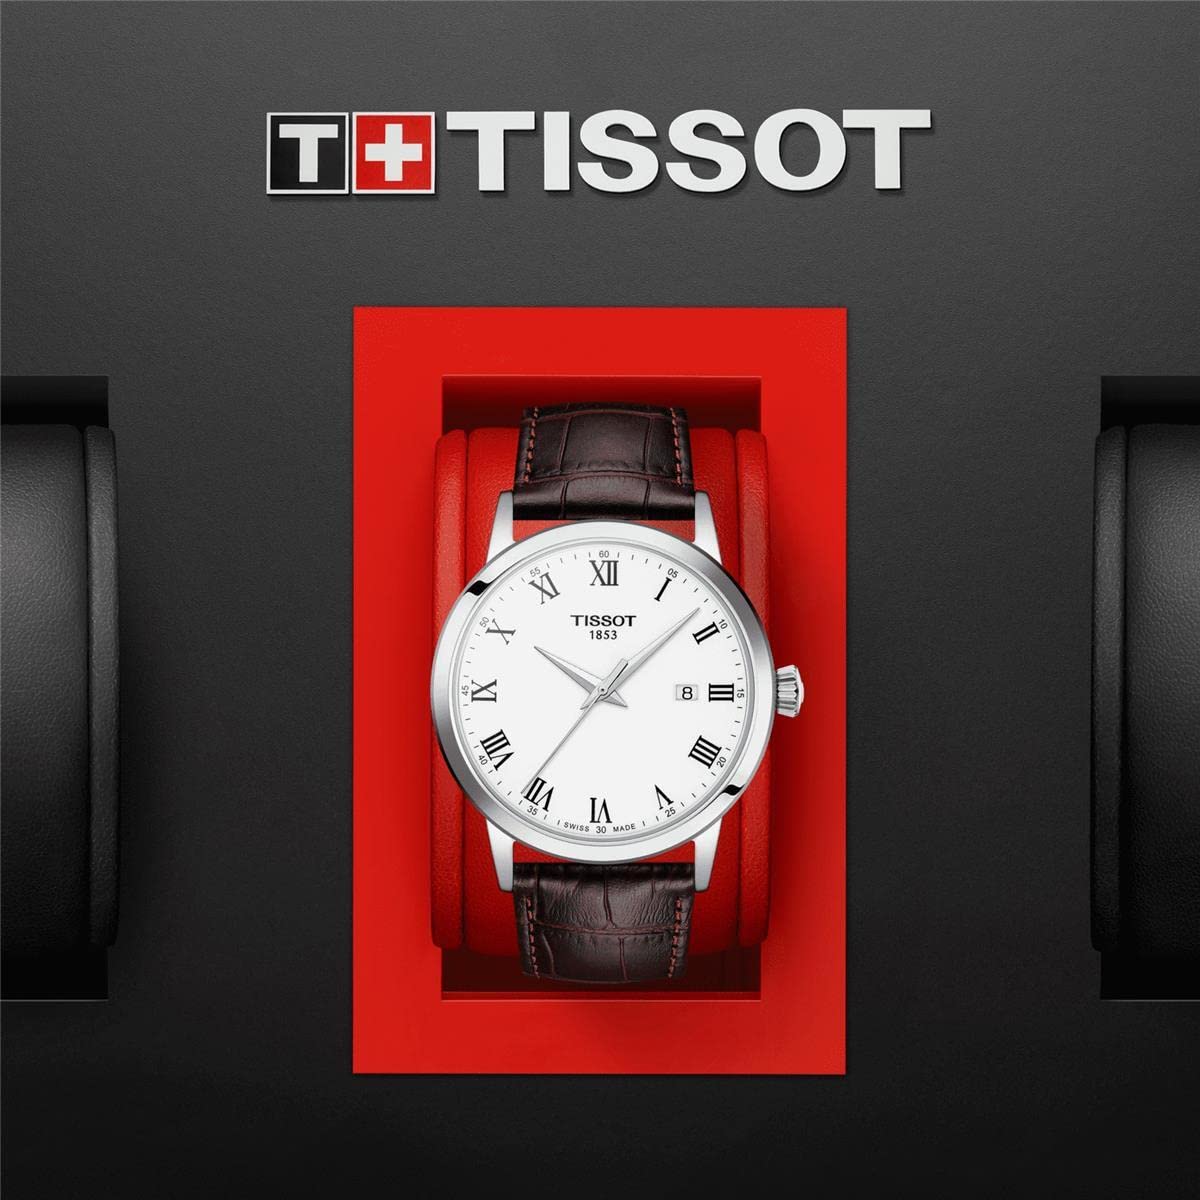 Tissot Mens Classic Dream Stainless Steel Dress Watch